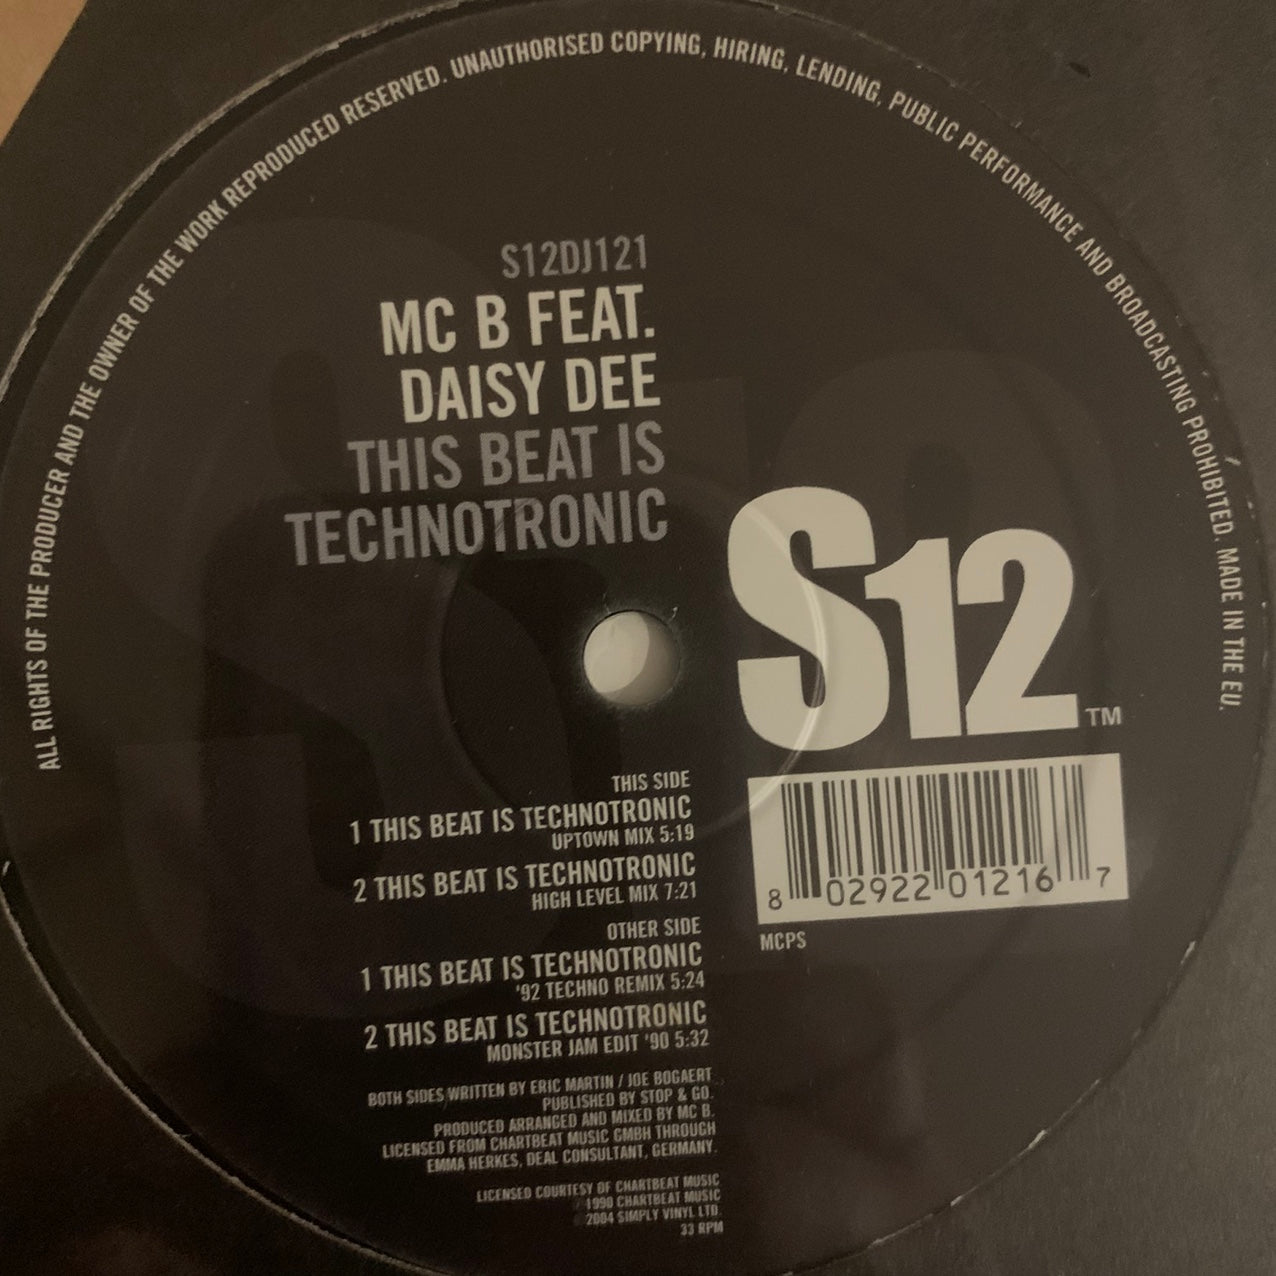 MC B Feat Daisy Dee “This Beat is Technotronic” 4 Track 12inch Vinyl Single ( Still Sealed )